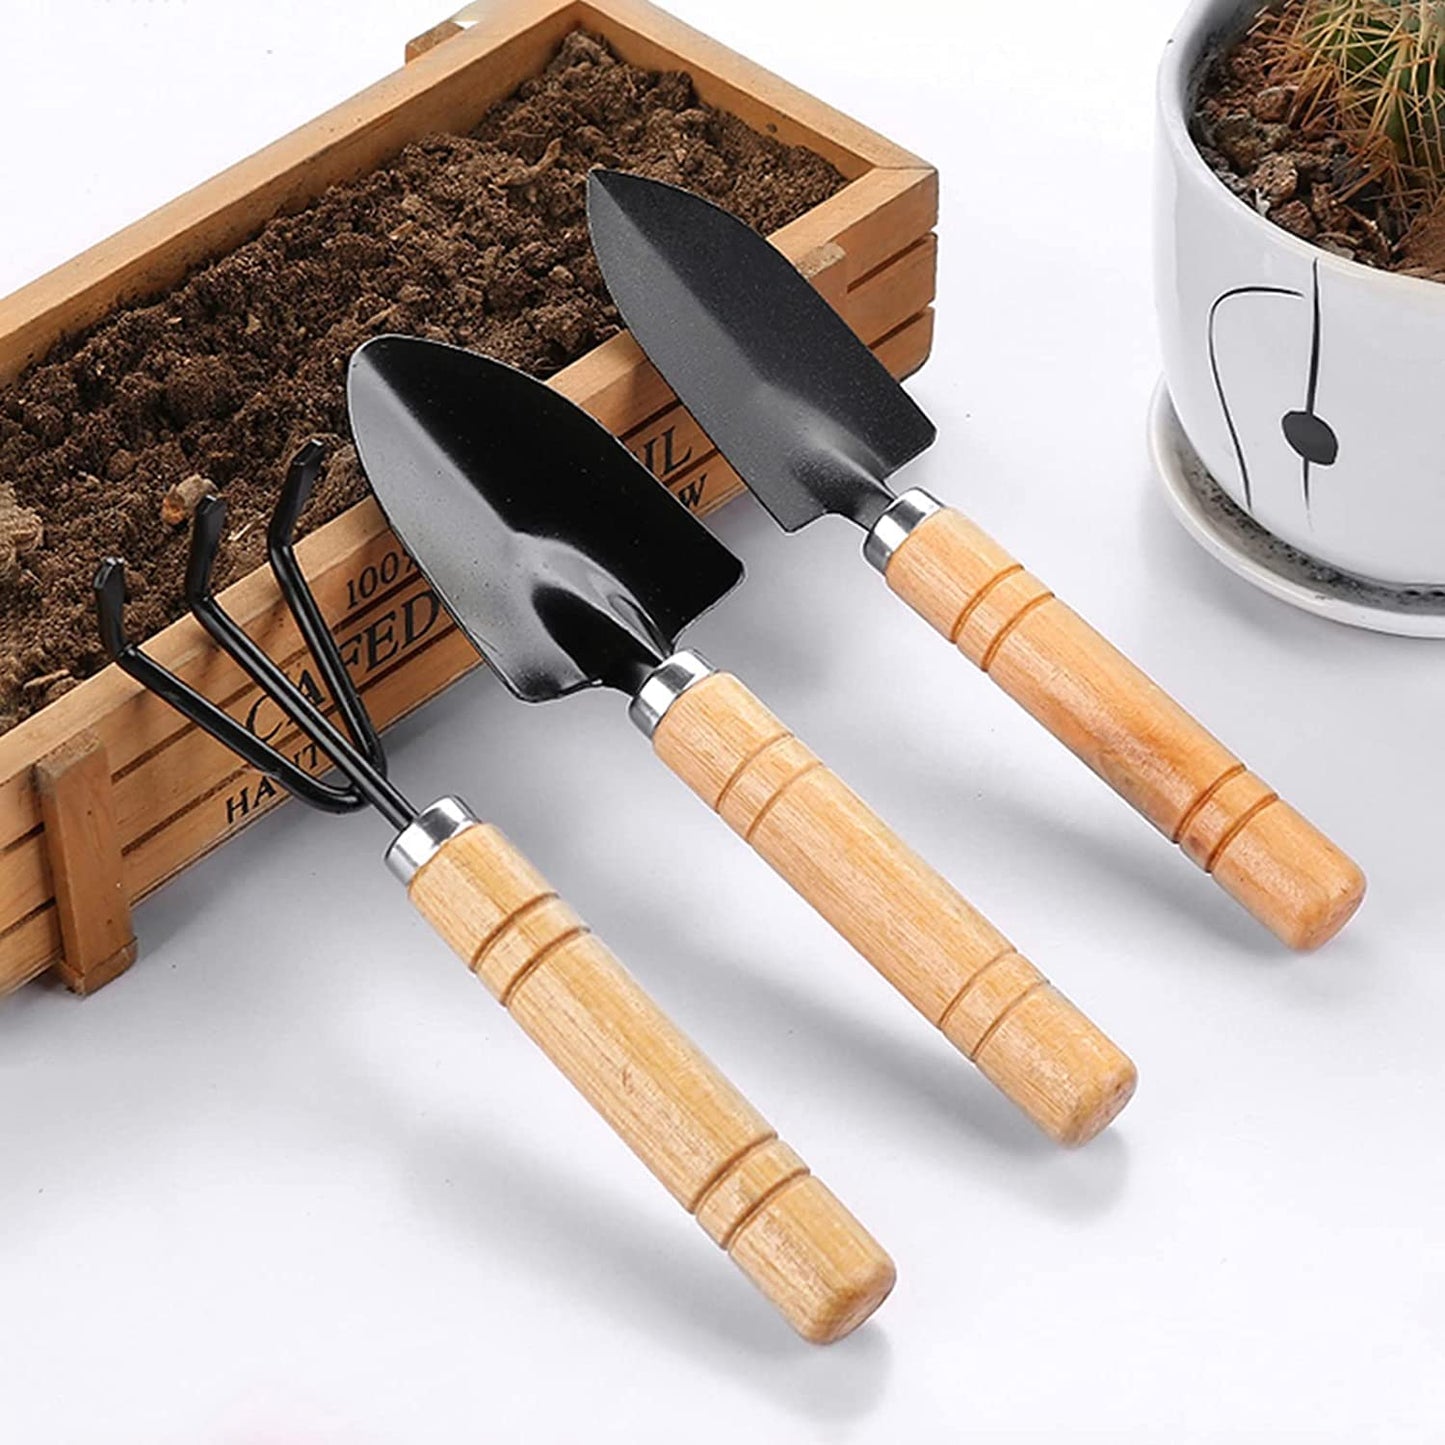 Rake Tool, Hand Trowel, 3 Pcs Gardening Hand Tool Kit For Home Gardening